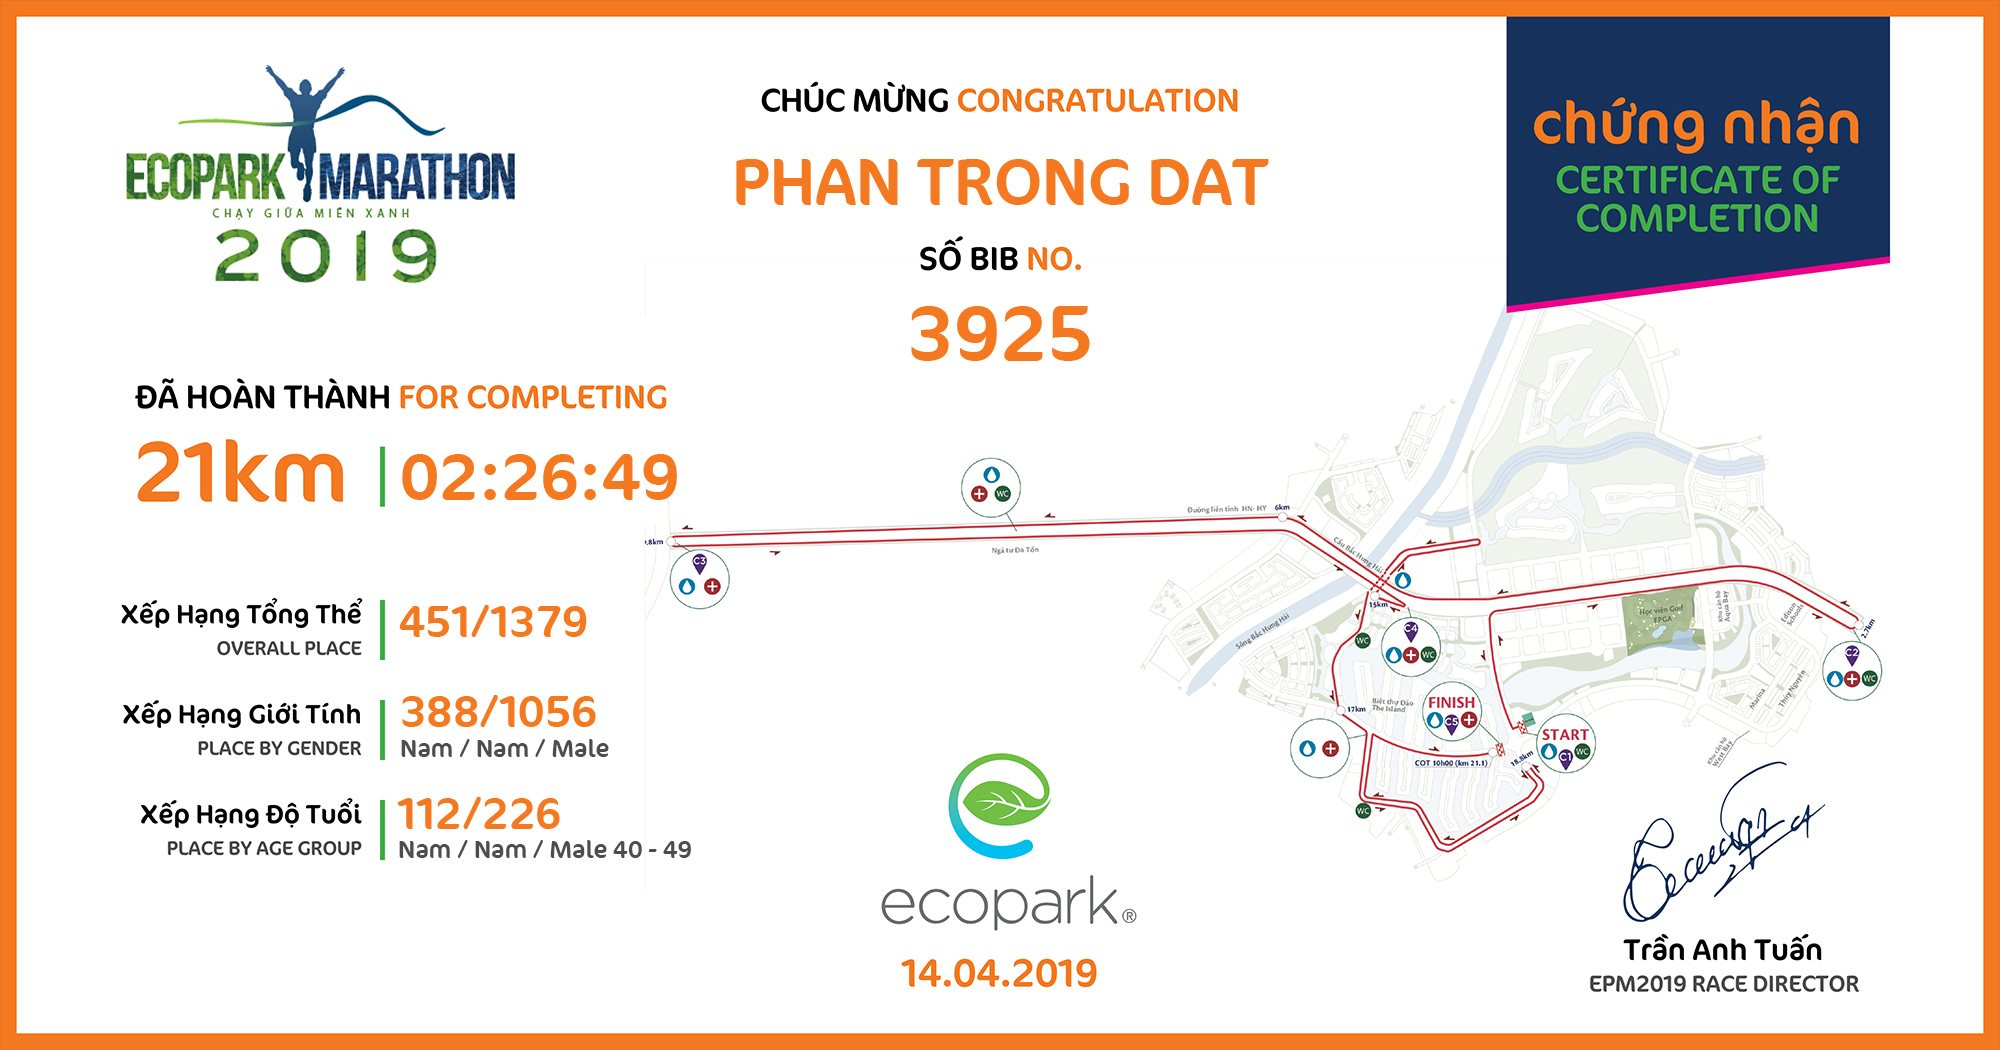 3925 - Phan Trong Dat